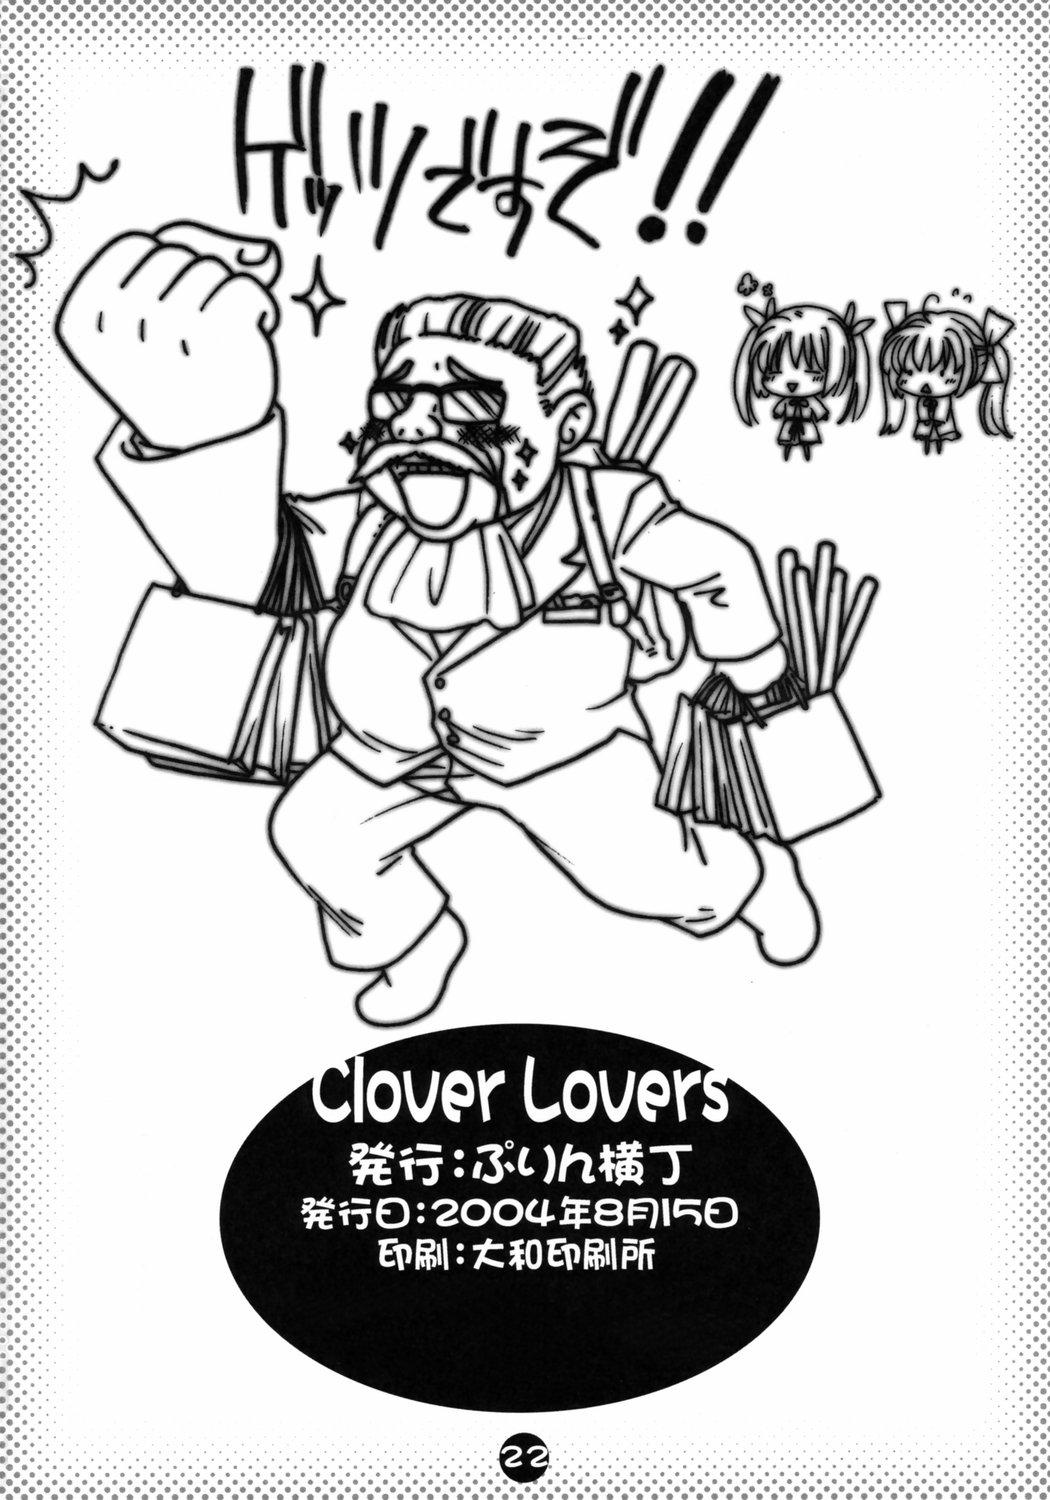 Clover Lovers 20